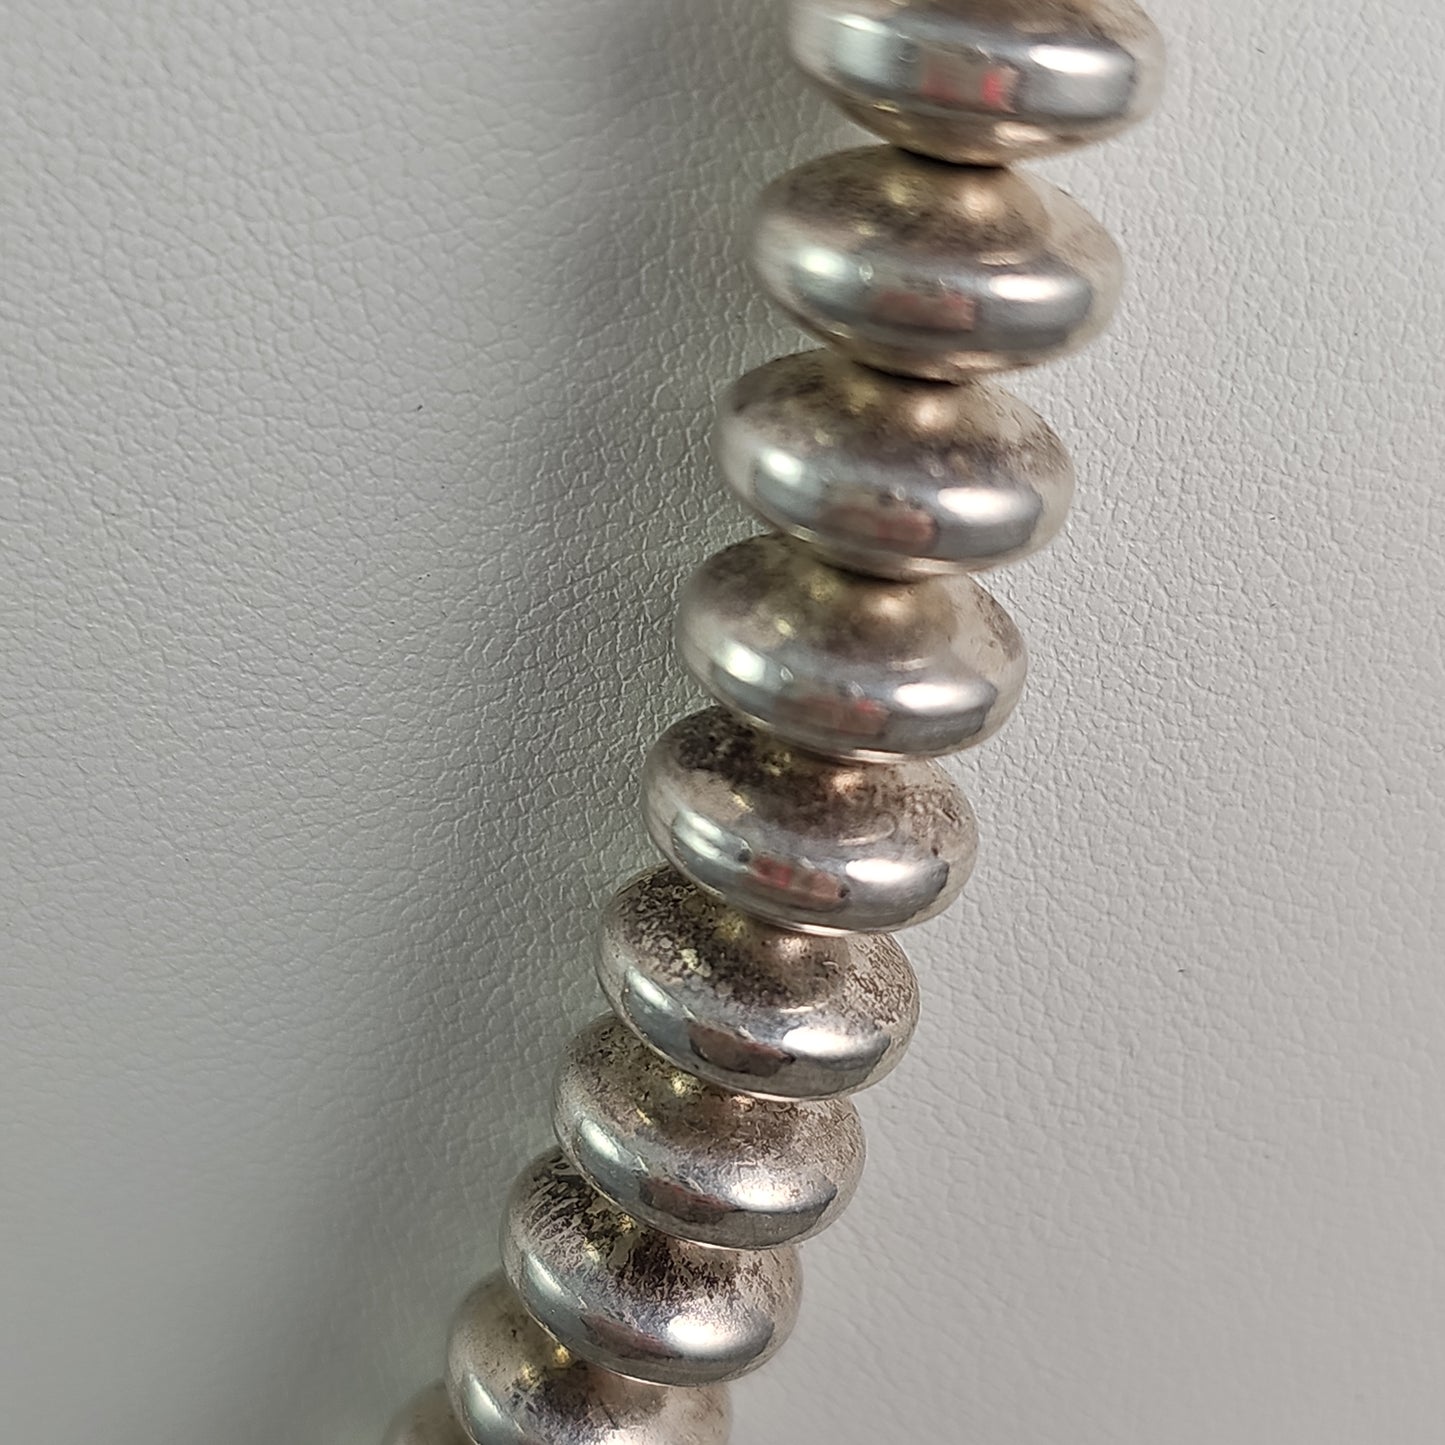 Navajo pearls